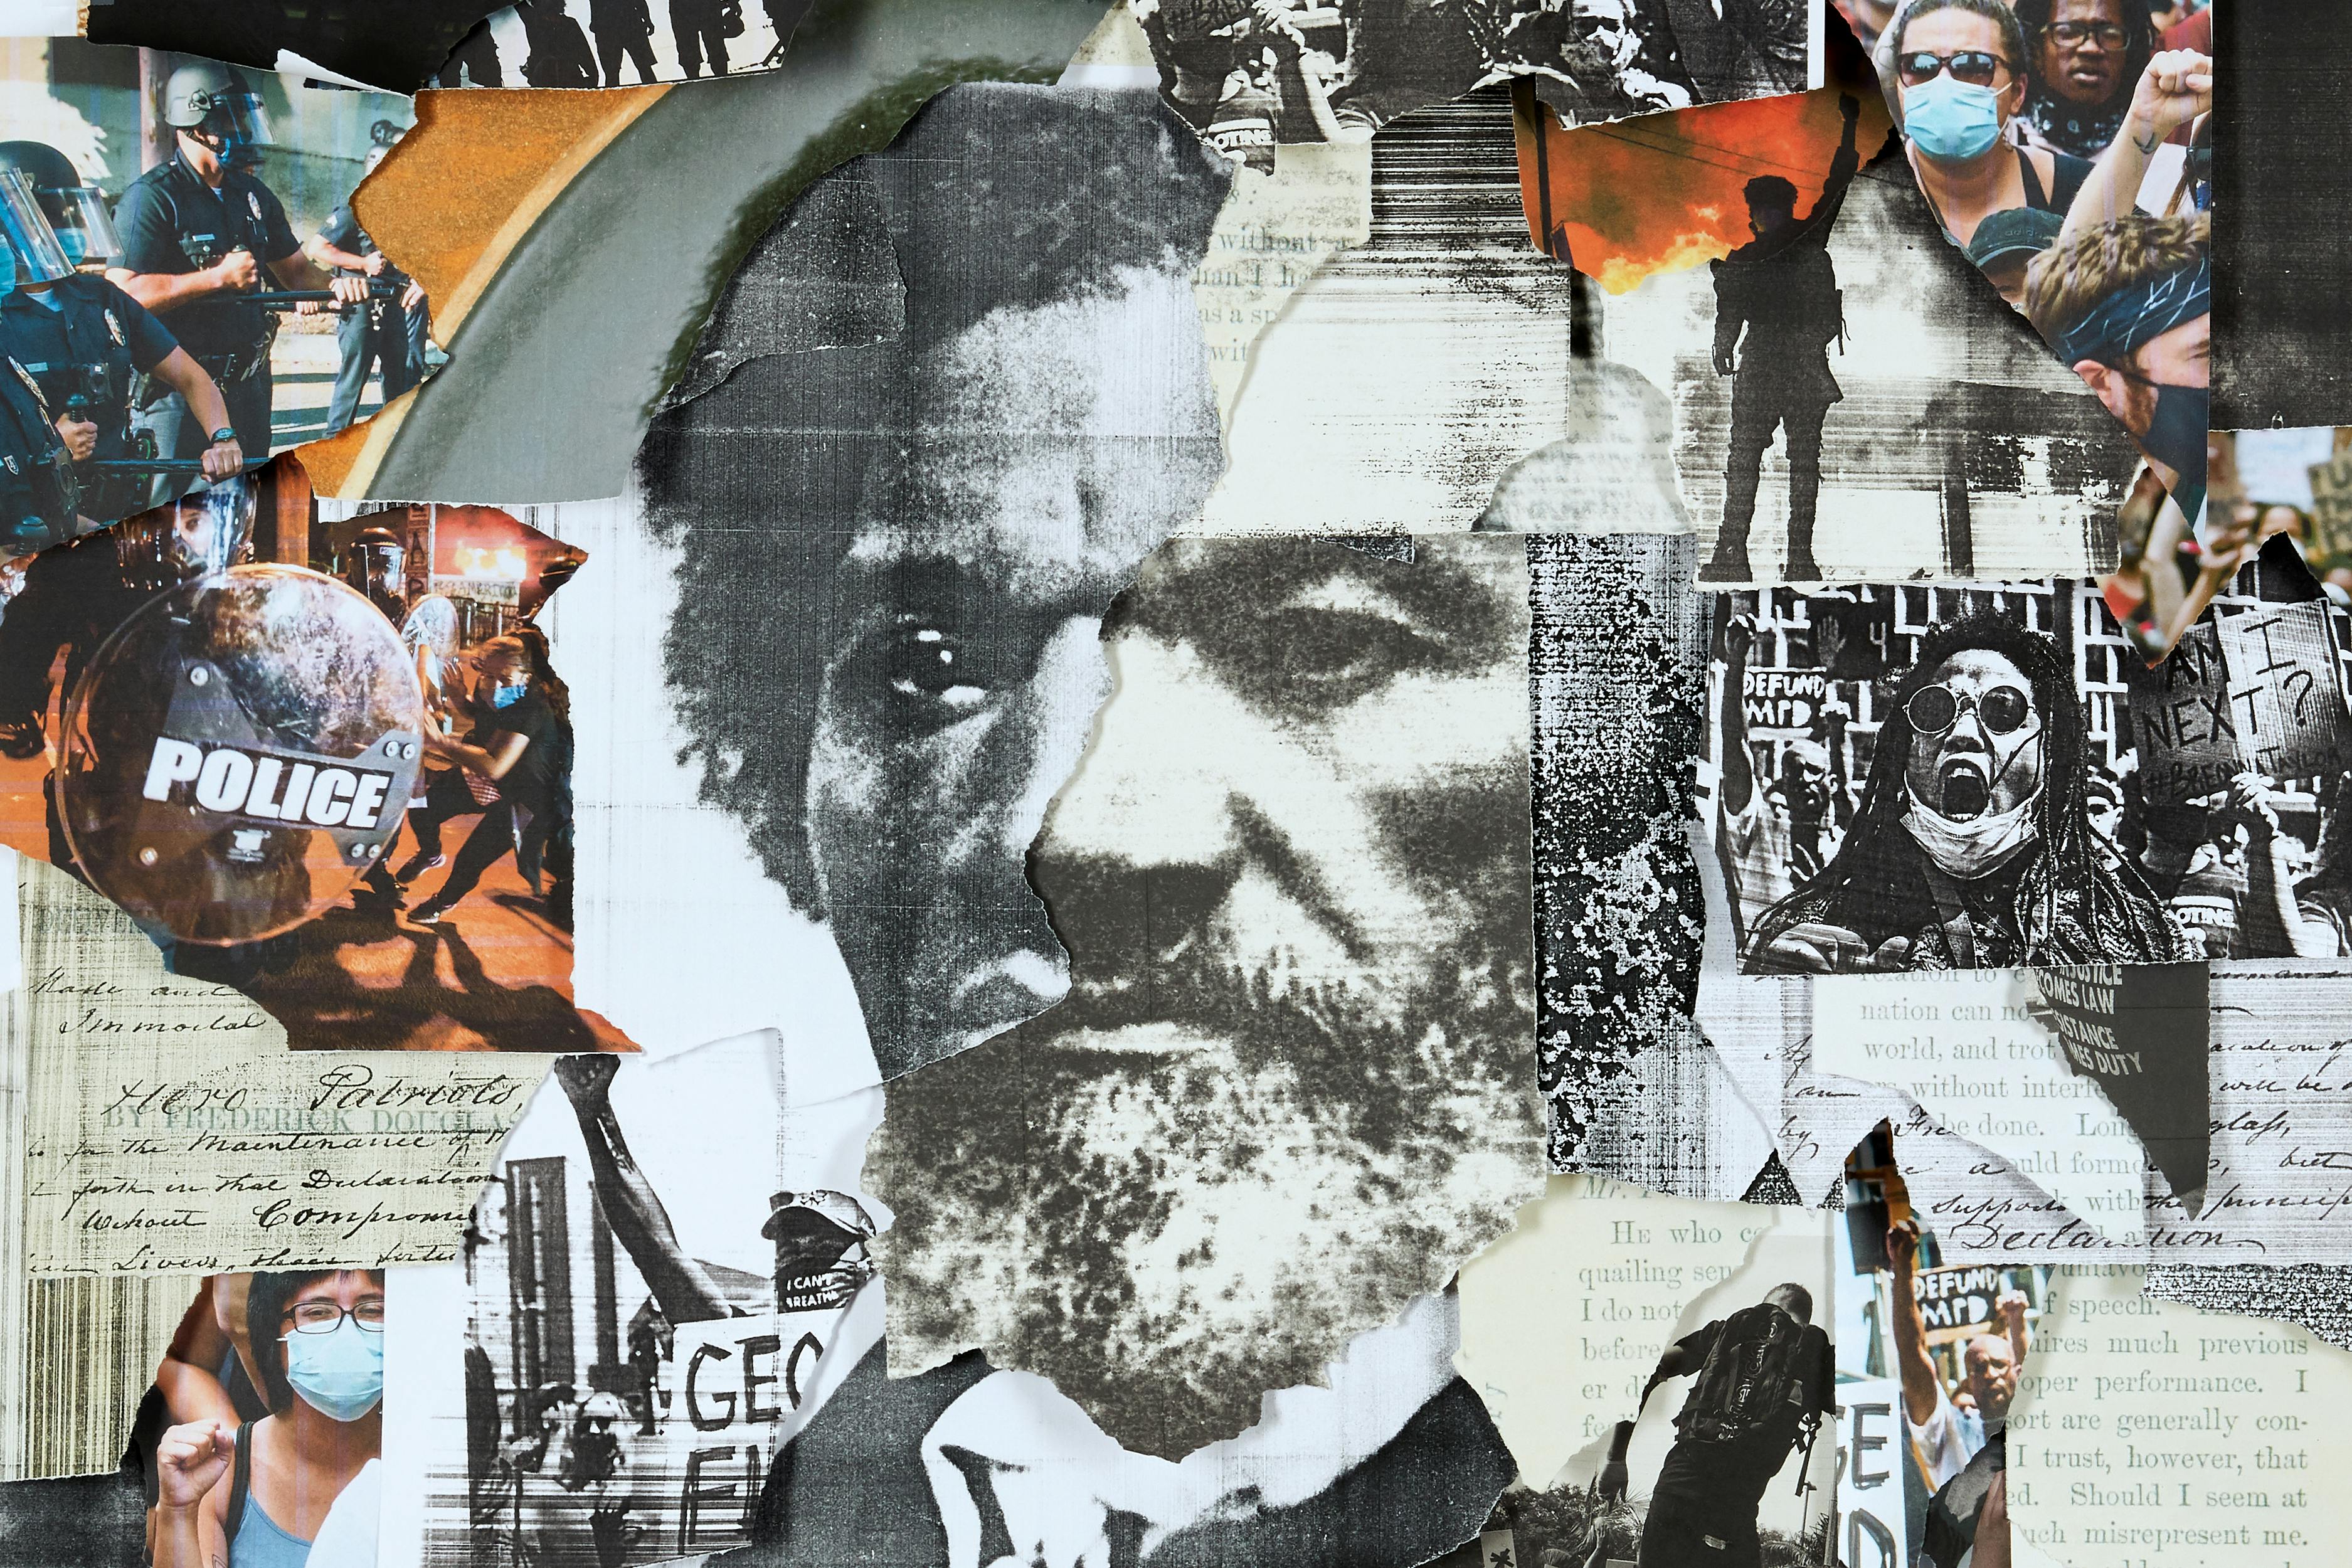 Frederick Douglass mural kicking up controversy : NPR